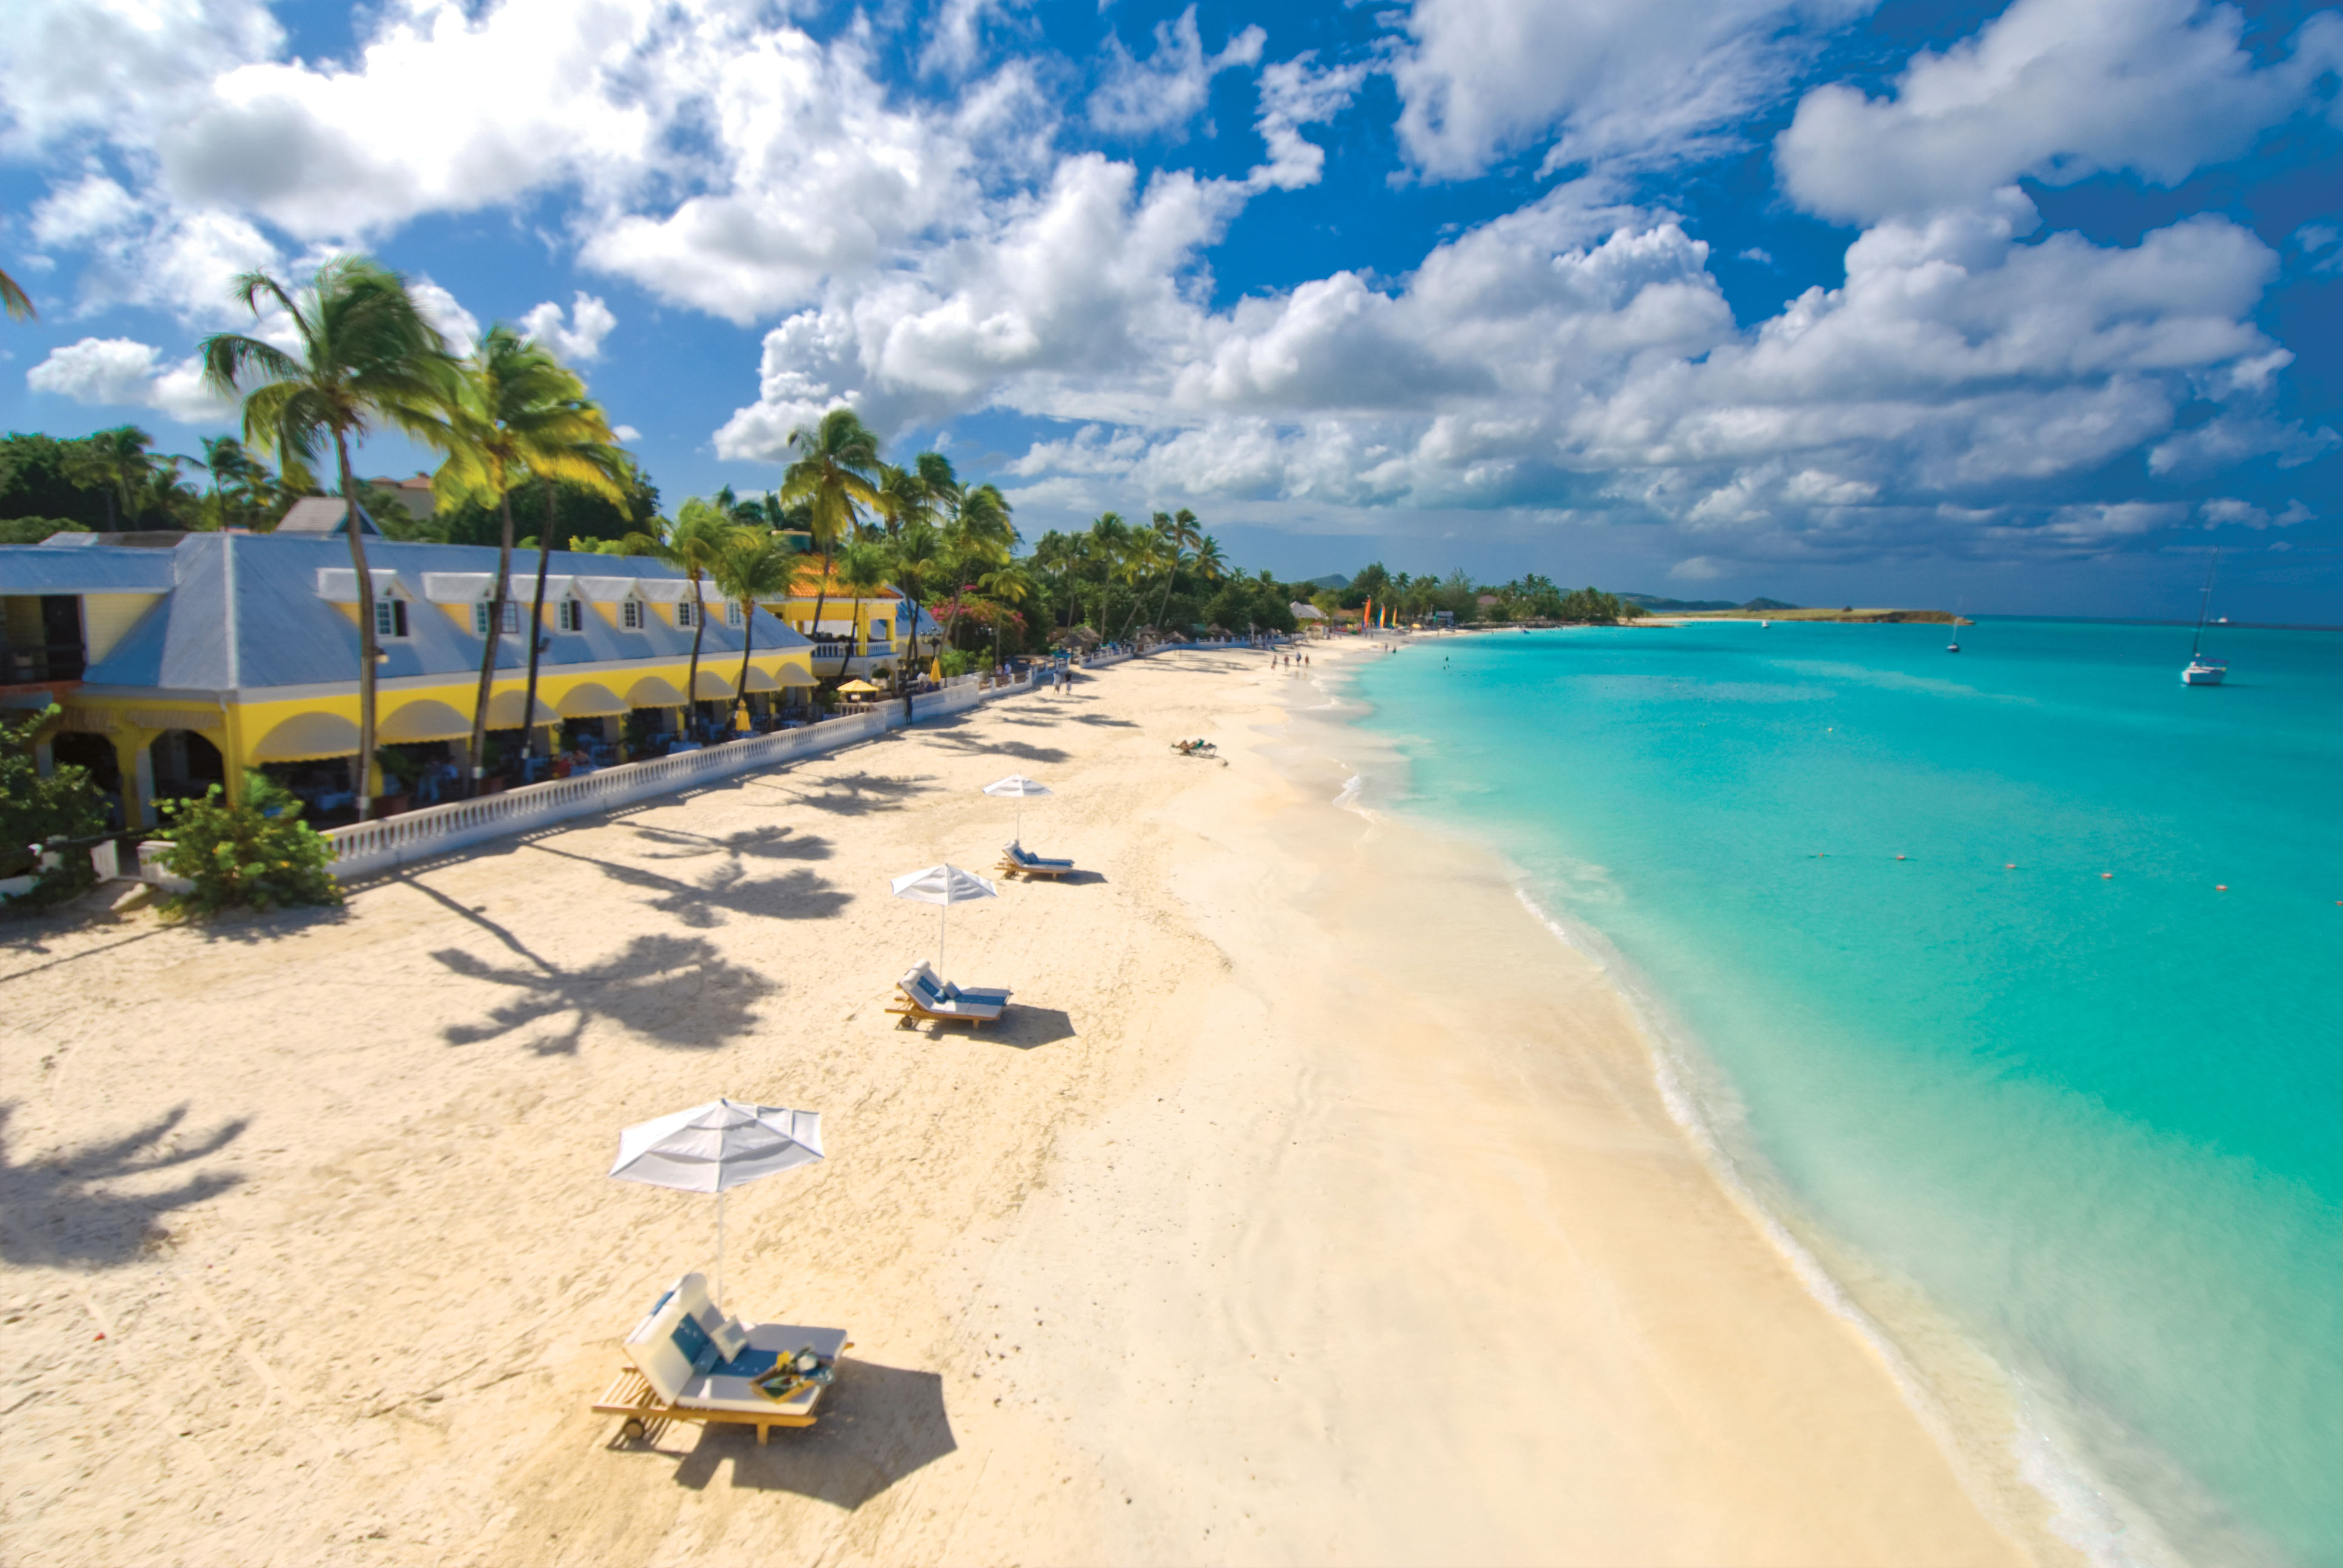  Sandals  Temporarily Closing Antigua Resort  TravelPress